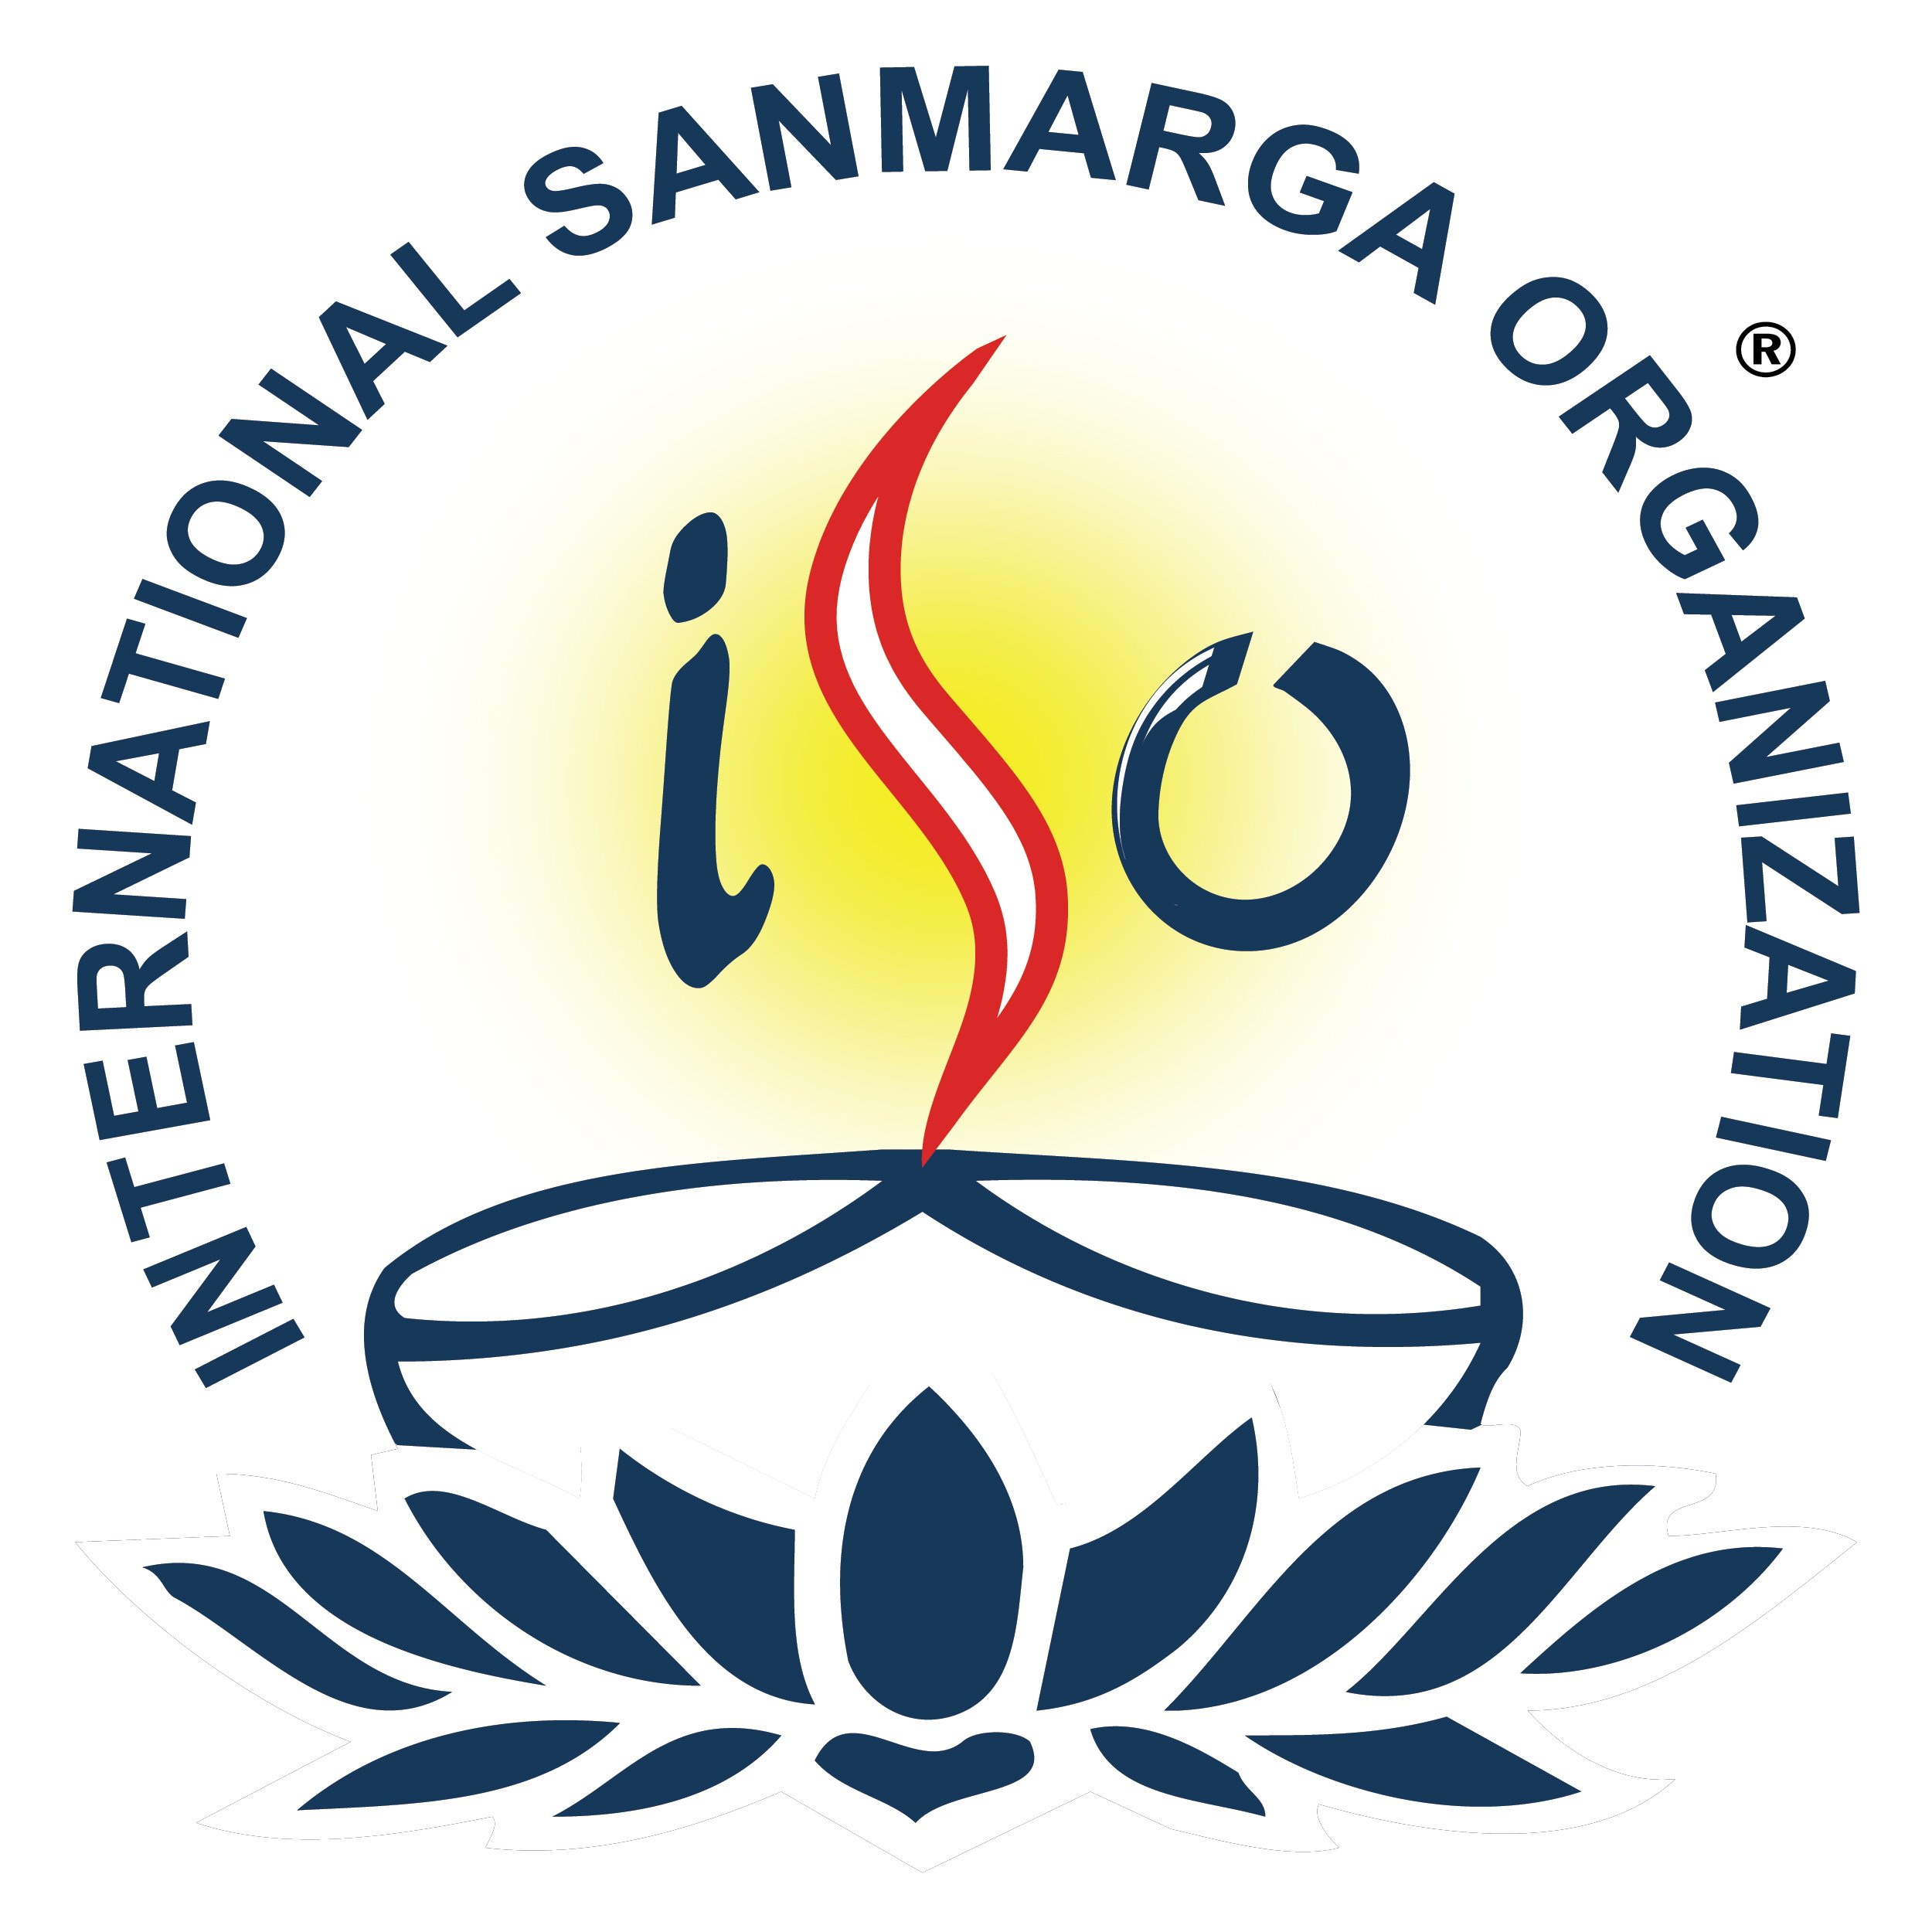 Founded organization at  2015  in  Tamilnadu as  International Sanmarga  Organization At  the  next  in  order  to  redeem  heritage,